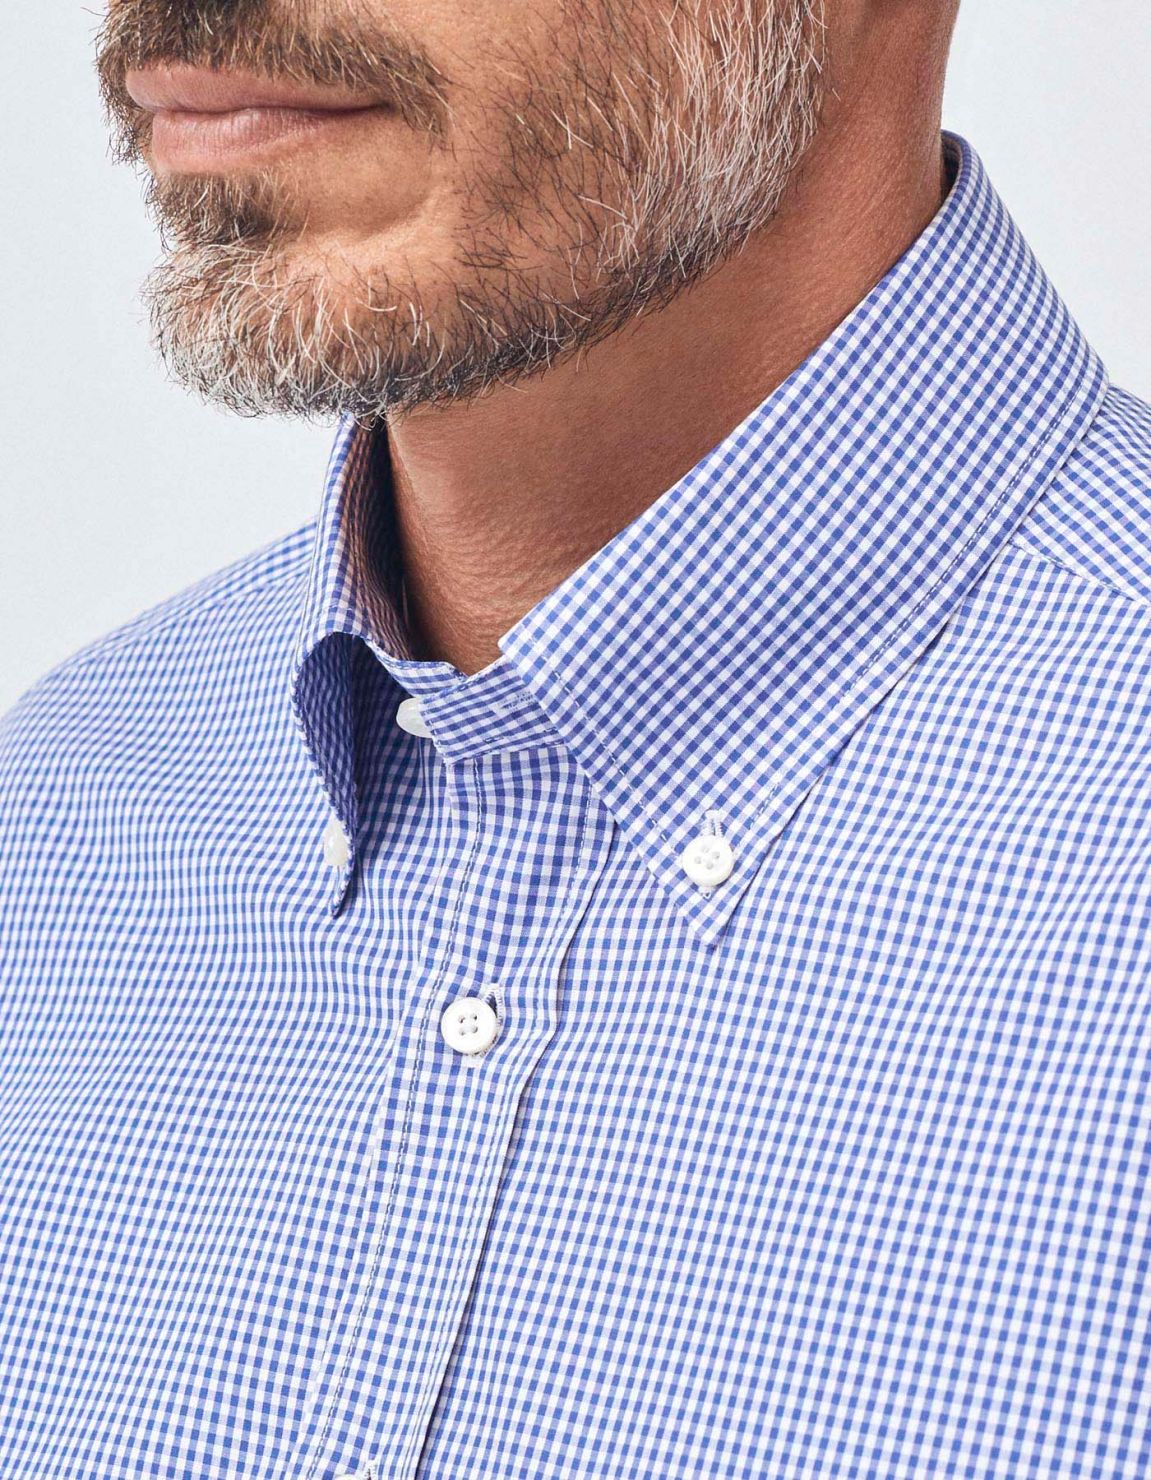 Shirt Collar button down Blue Poplin Evolution Classic Fit 3